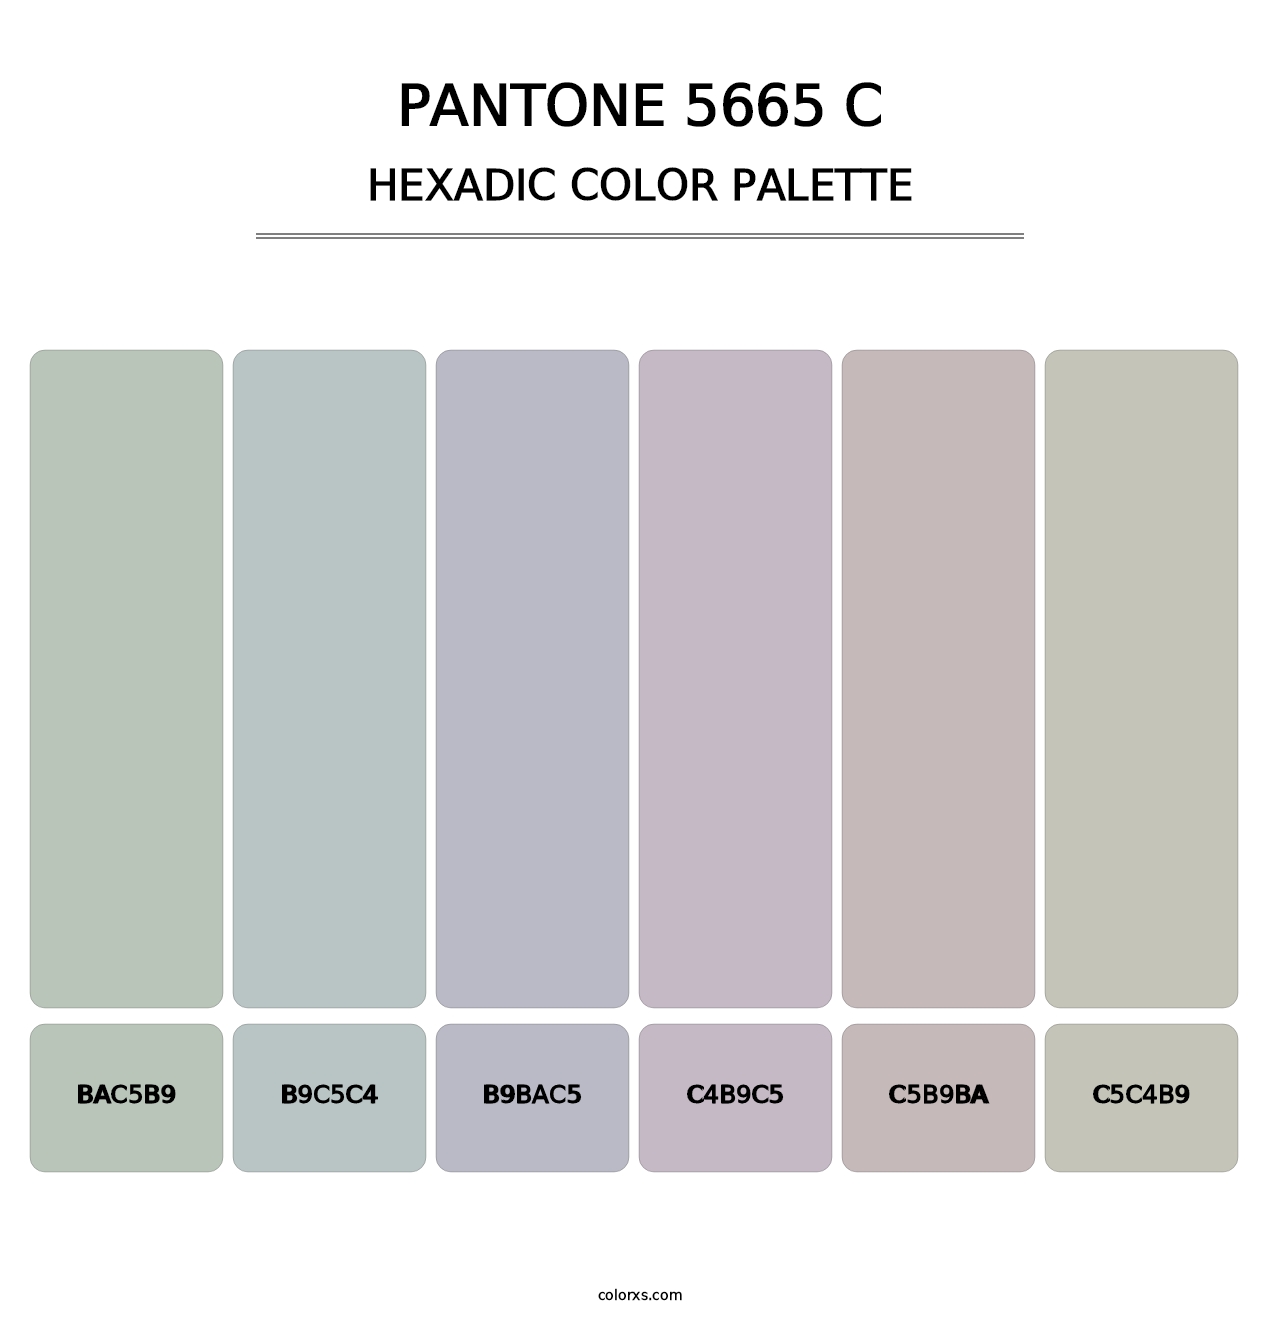 PANTONE 5665 C - Hexadic Color Palette